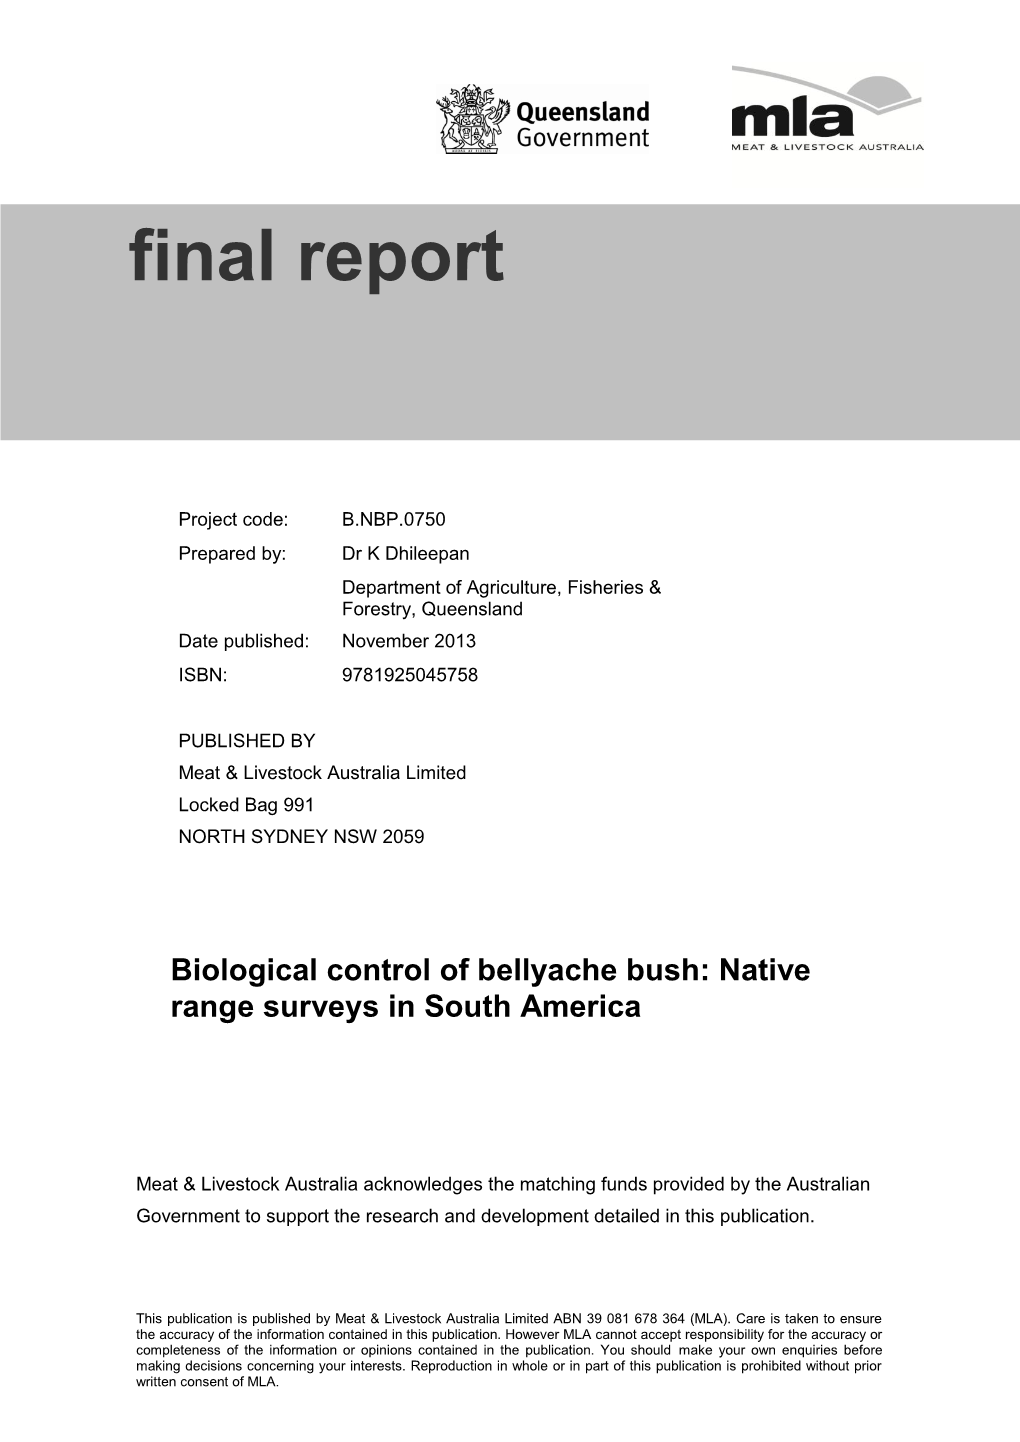 Biological Control of Bellyache Bush: Native Range Surveys in South America